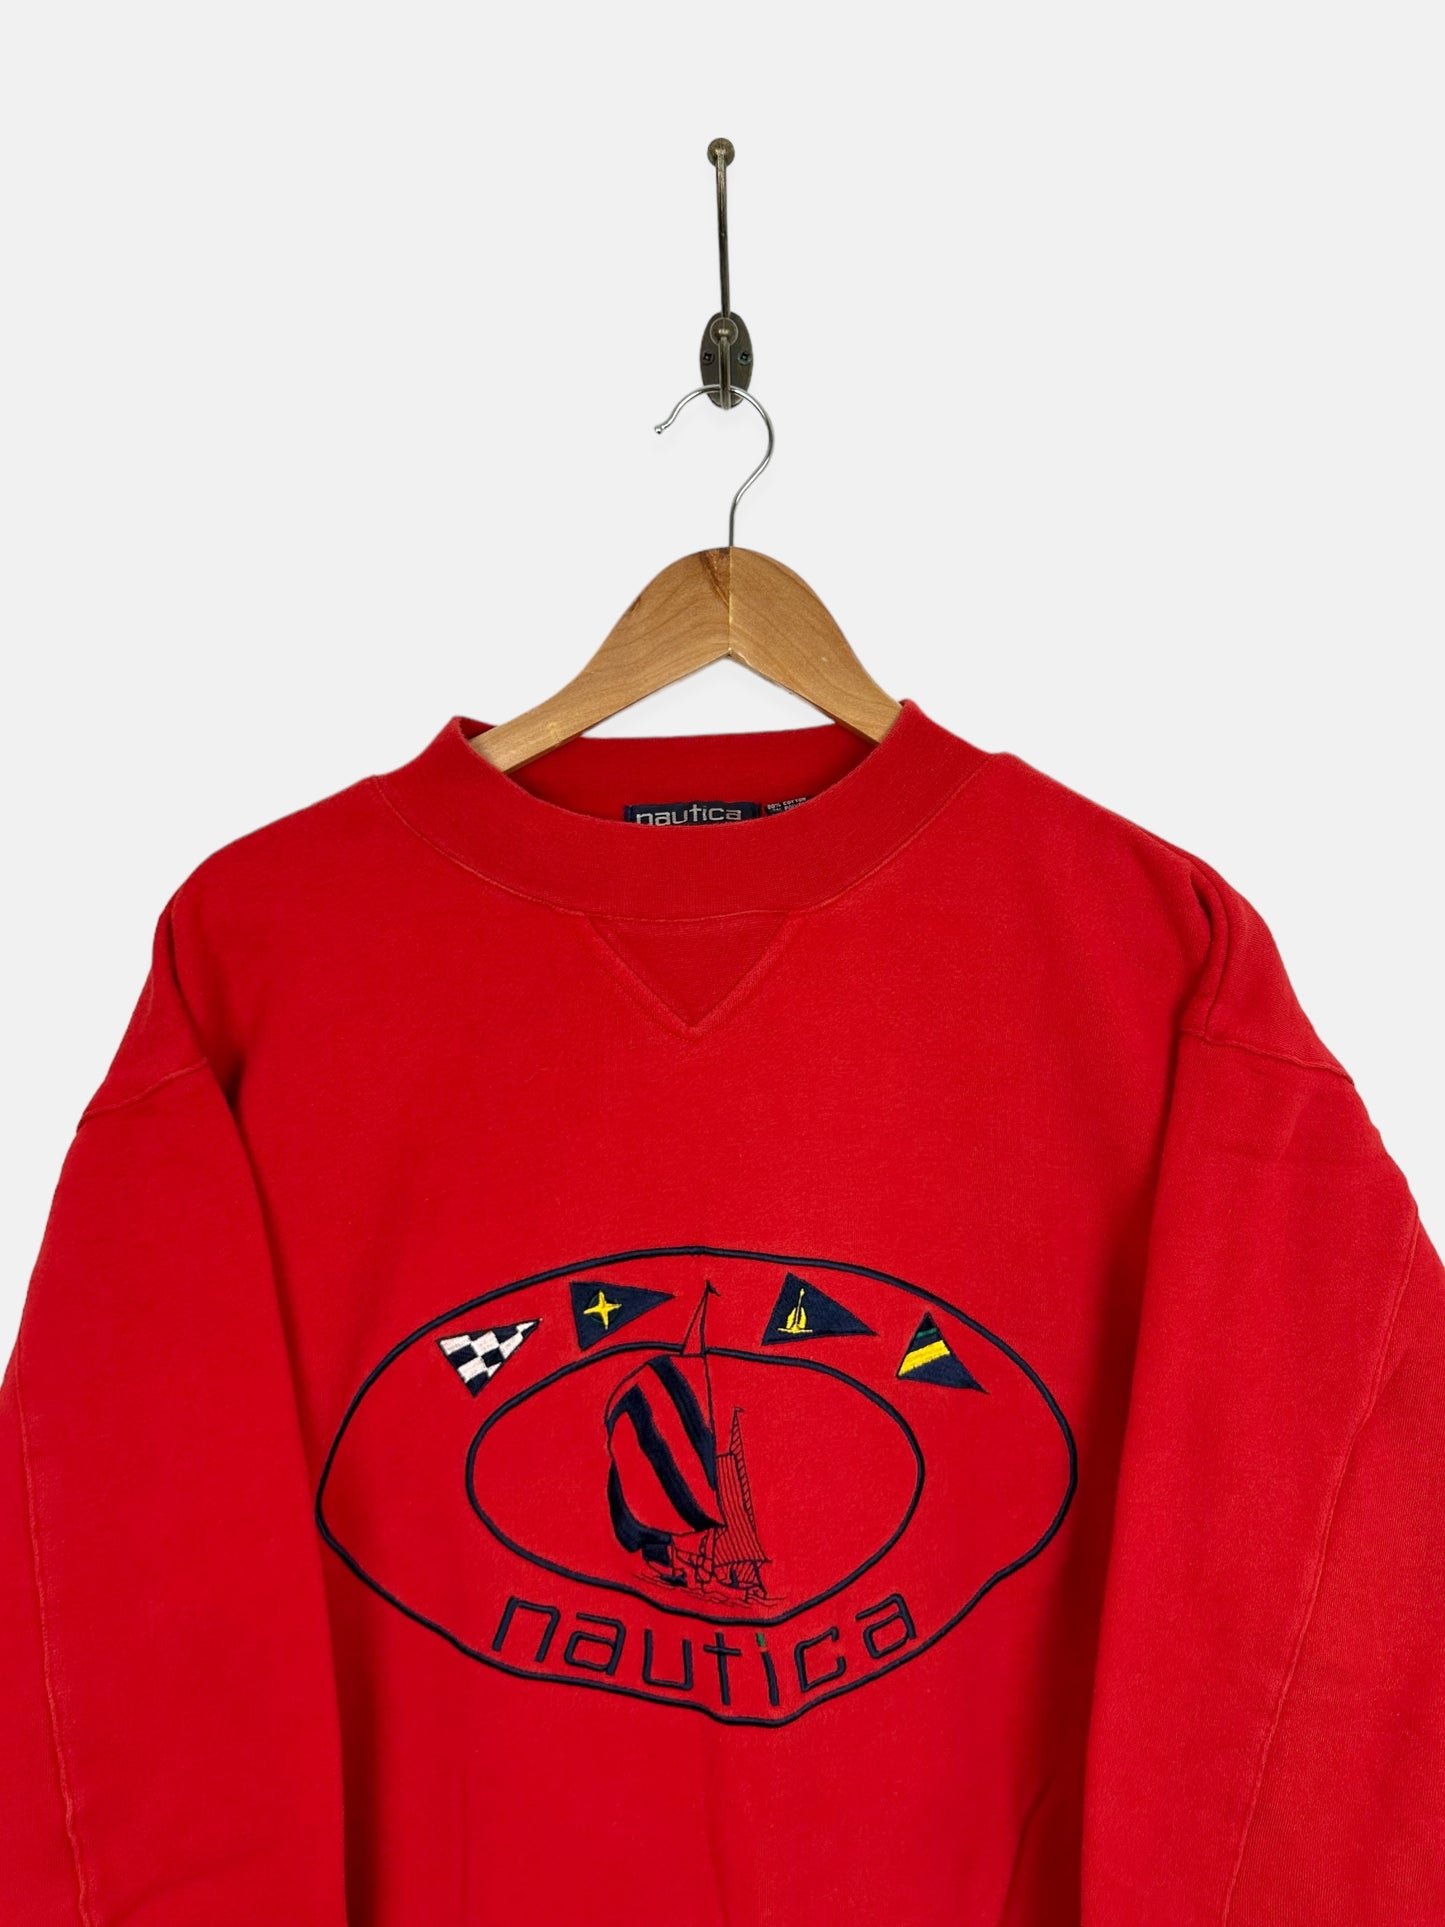 90's Nautica Embroidered Vintage Sweatshirt Size 10